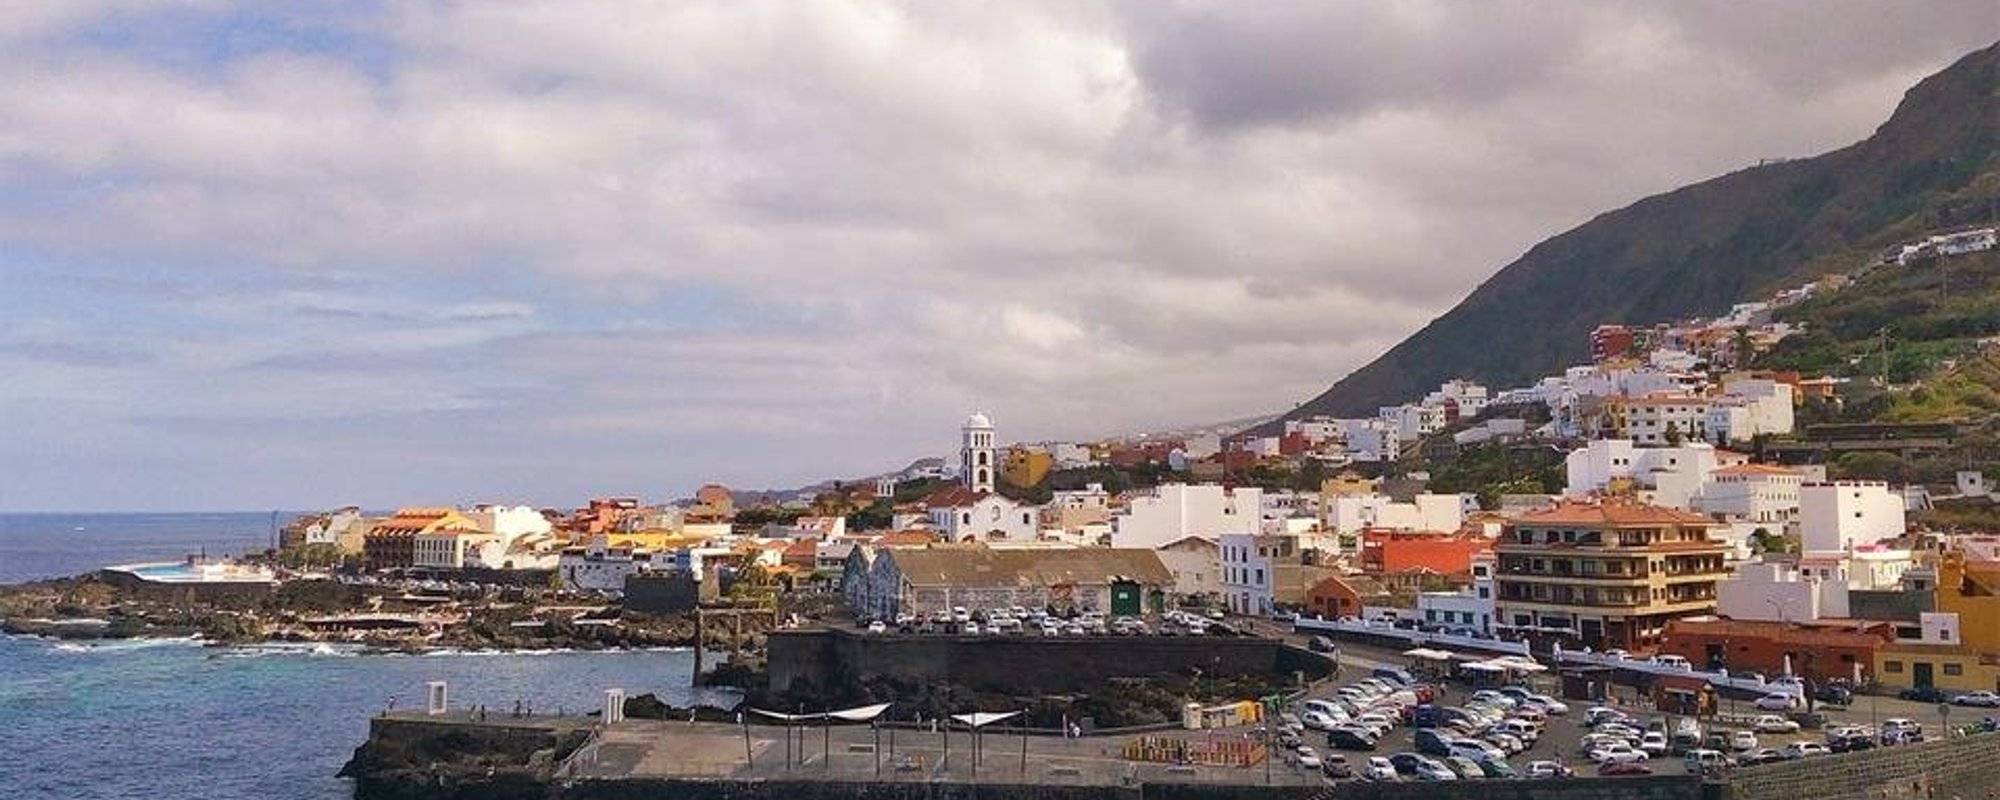 Landscape / Cityscape Photography: charming town of Garachico, Tenerife Island